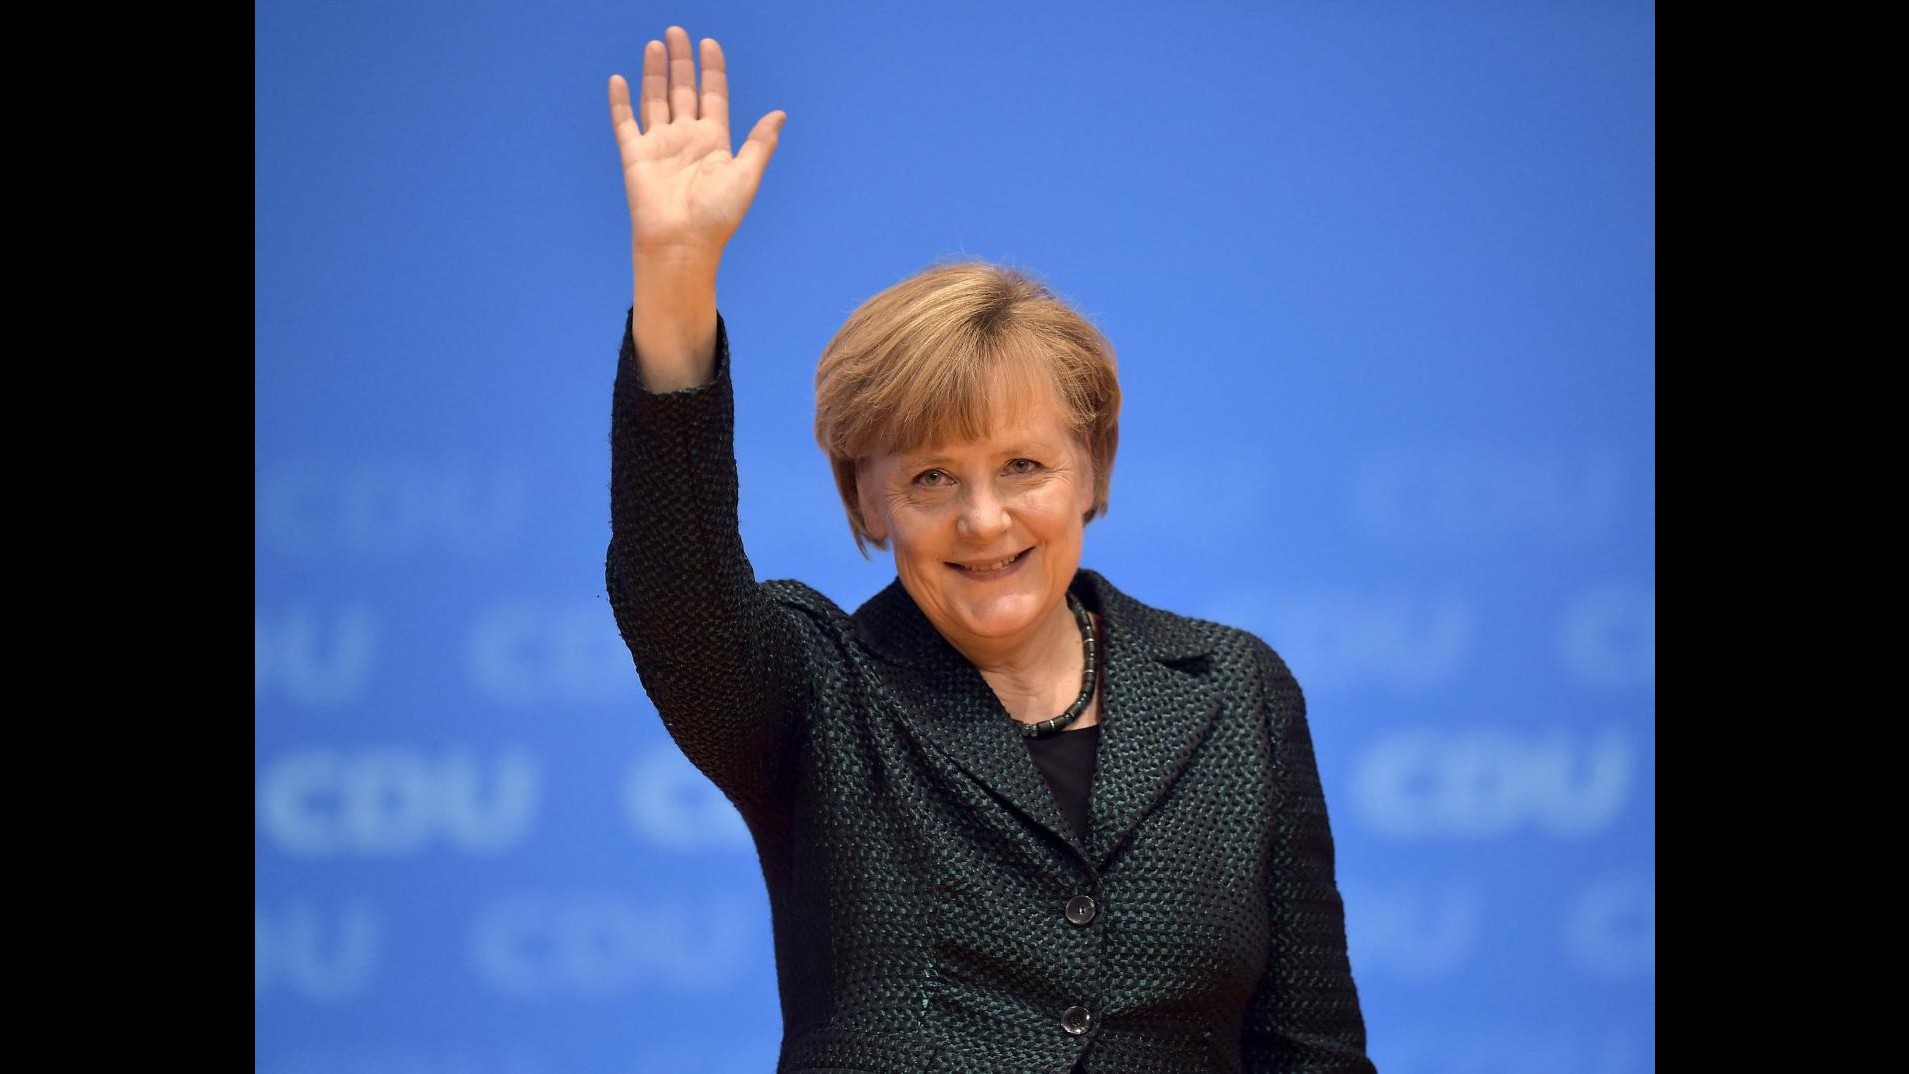 Germania, Merkel: Non lasciatevi ingannare da retorica di destra estrema